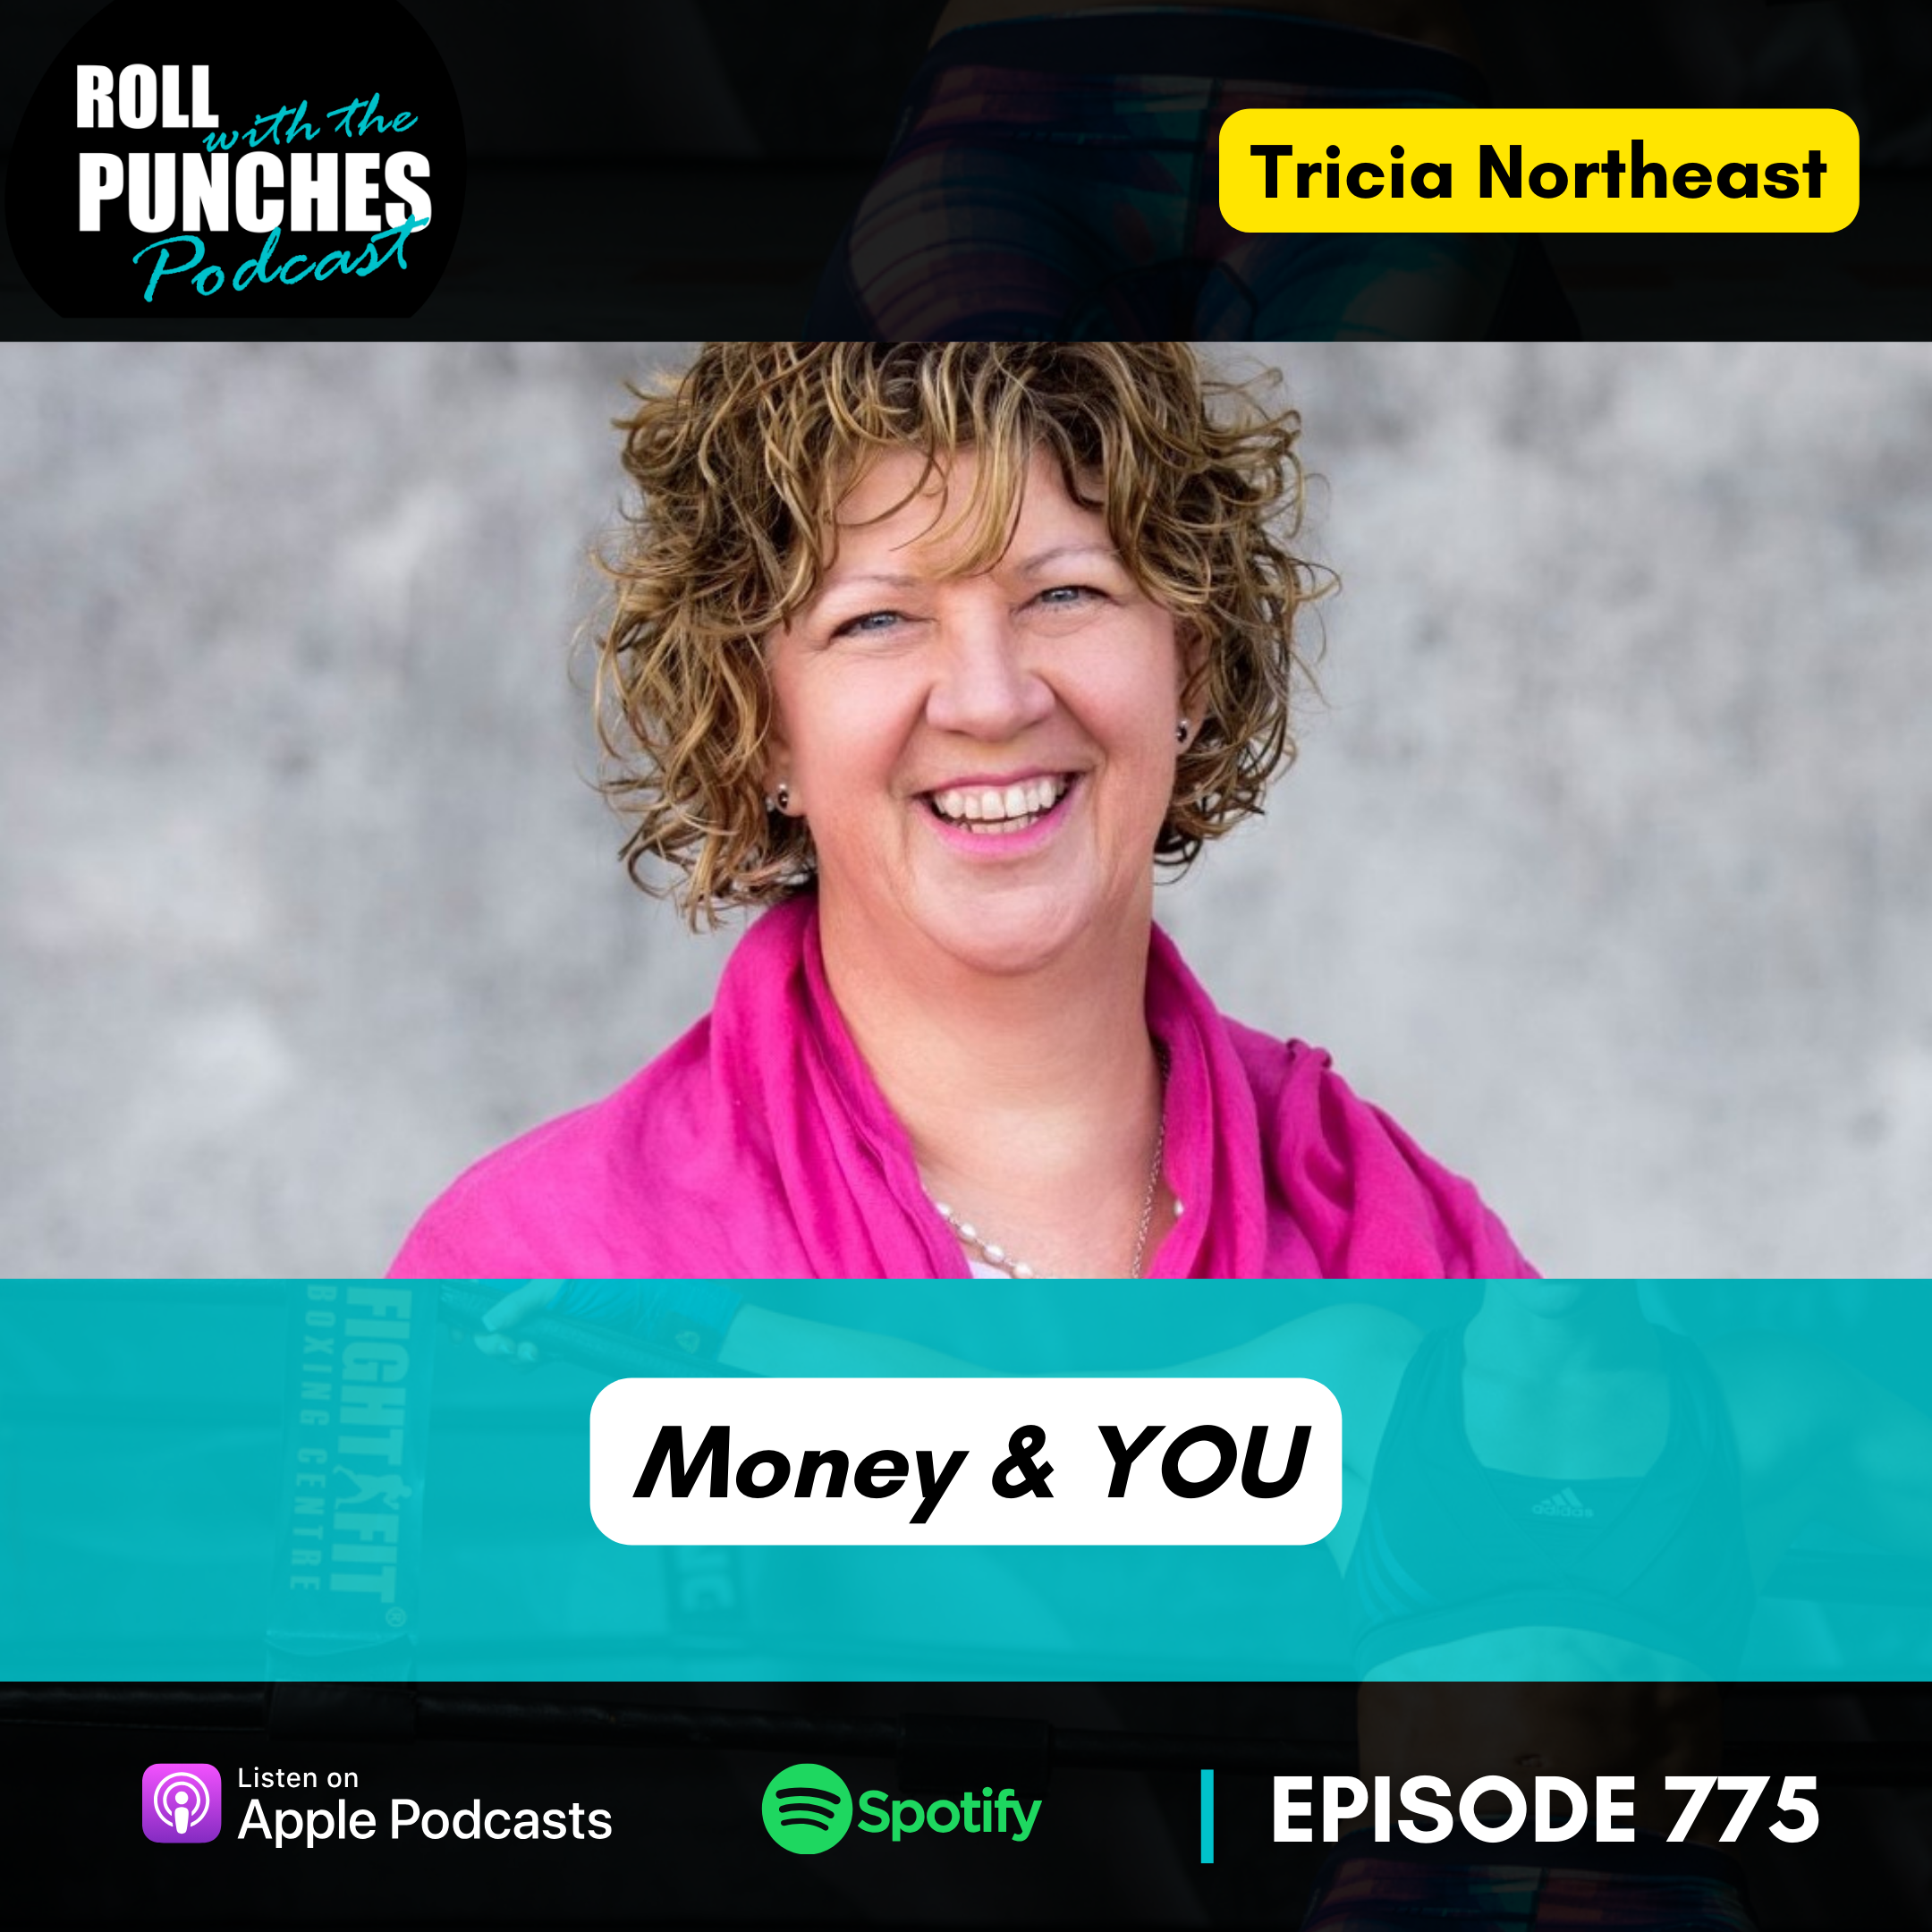 Money & YOU | Tricia Northeast - 775